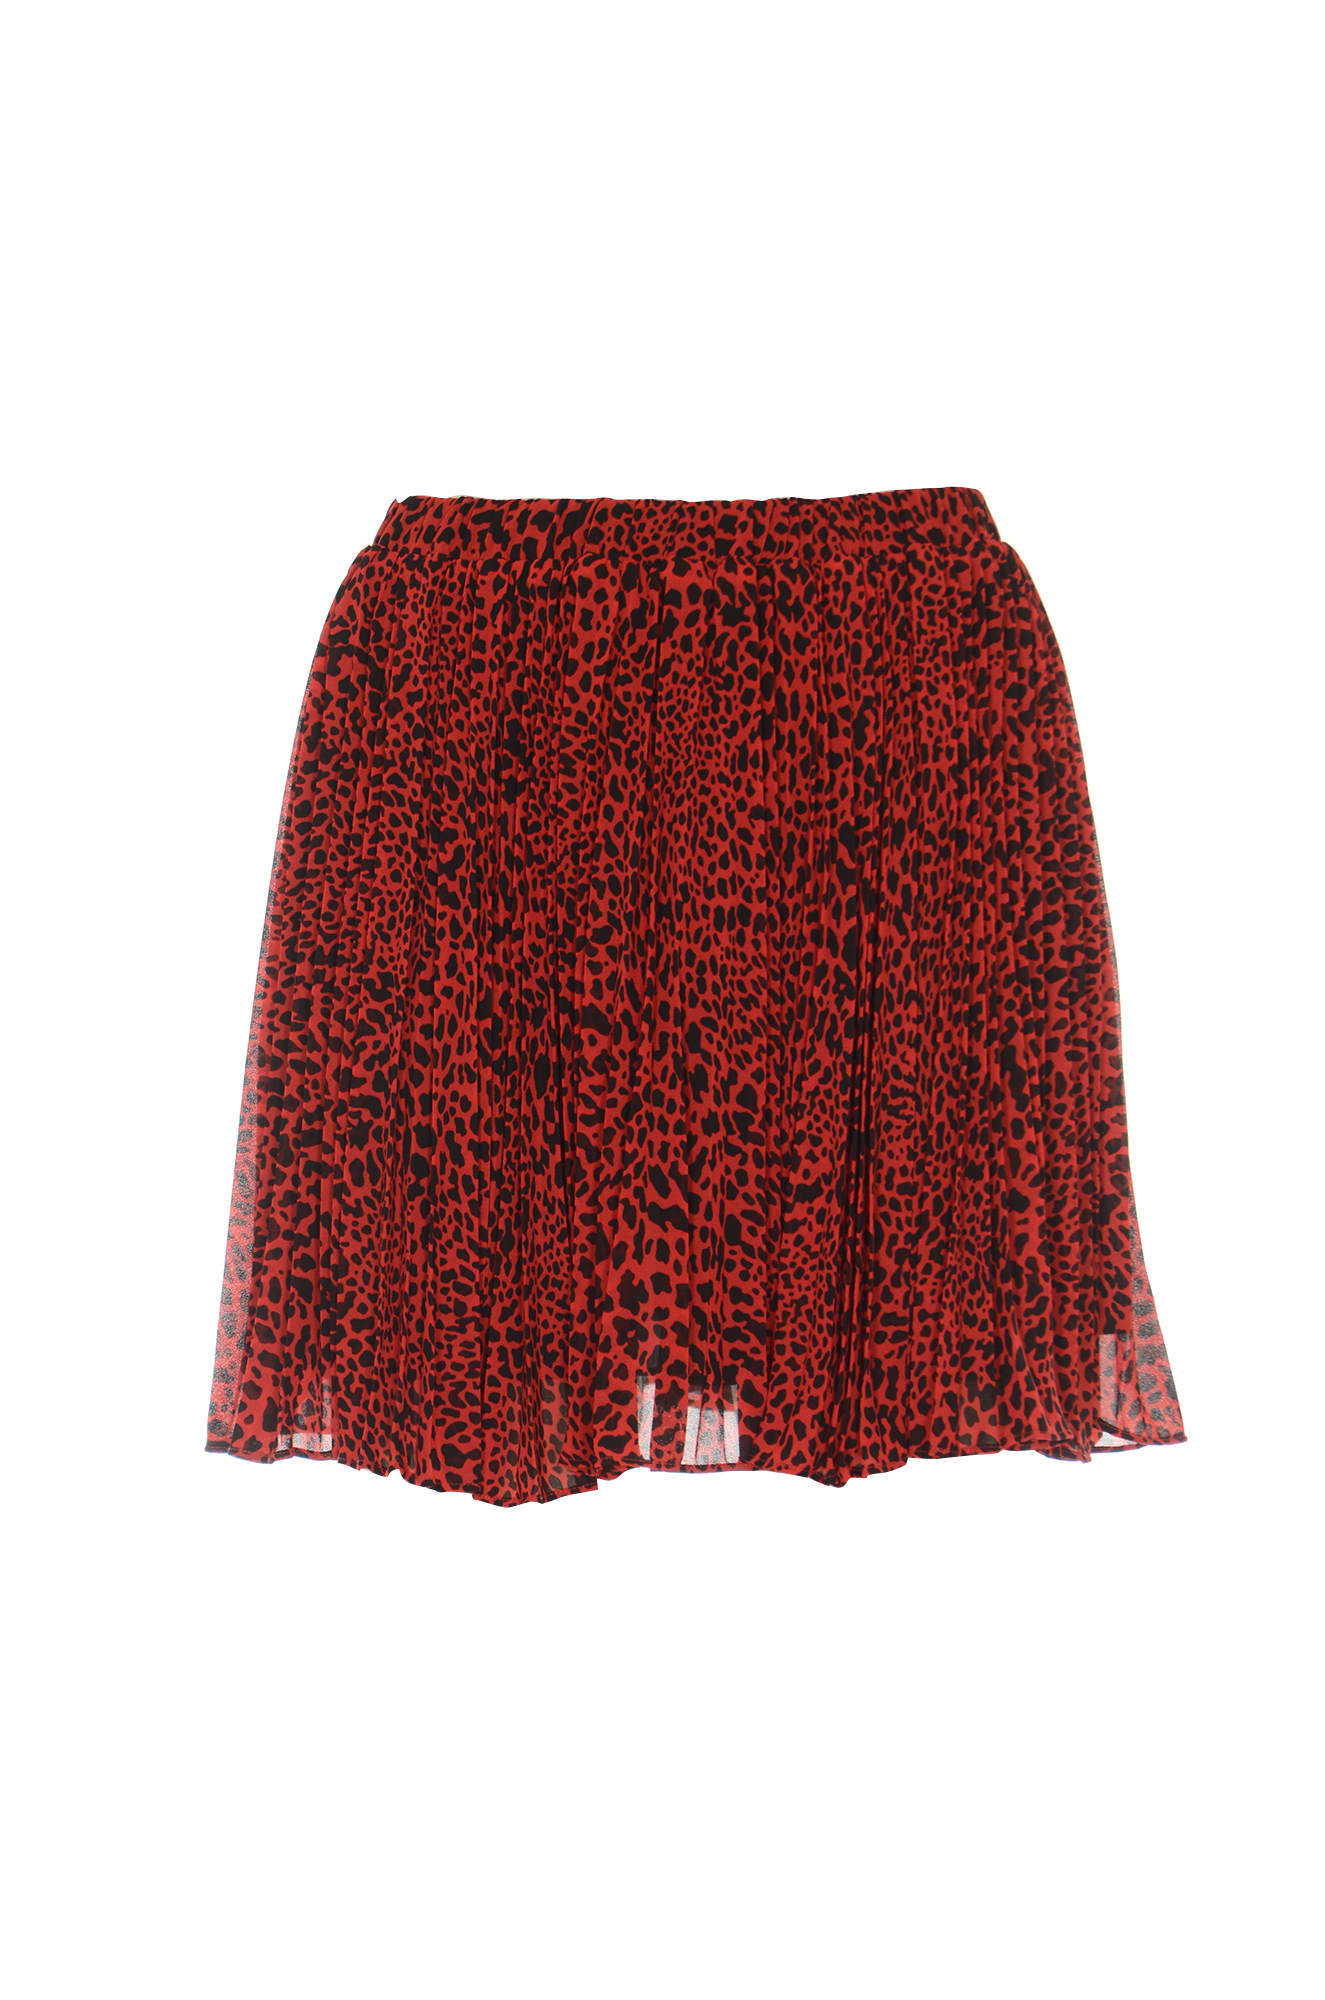 Michael Kors Elastic Waist Pleated Short Skirt